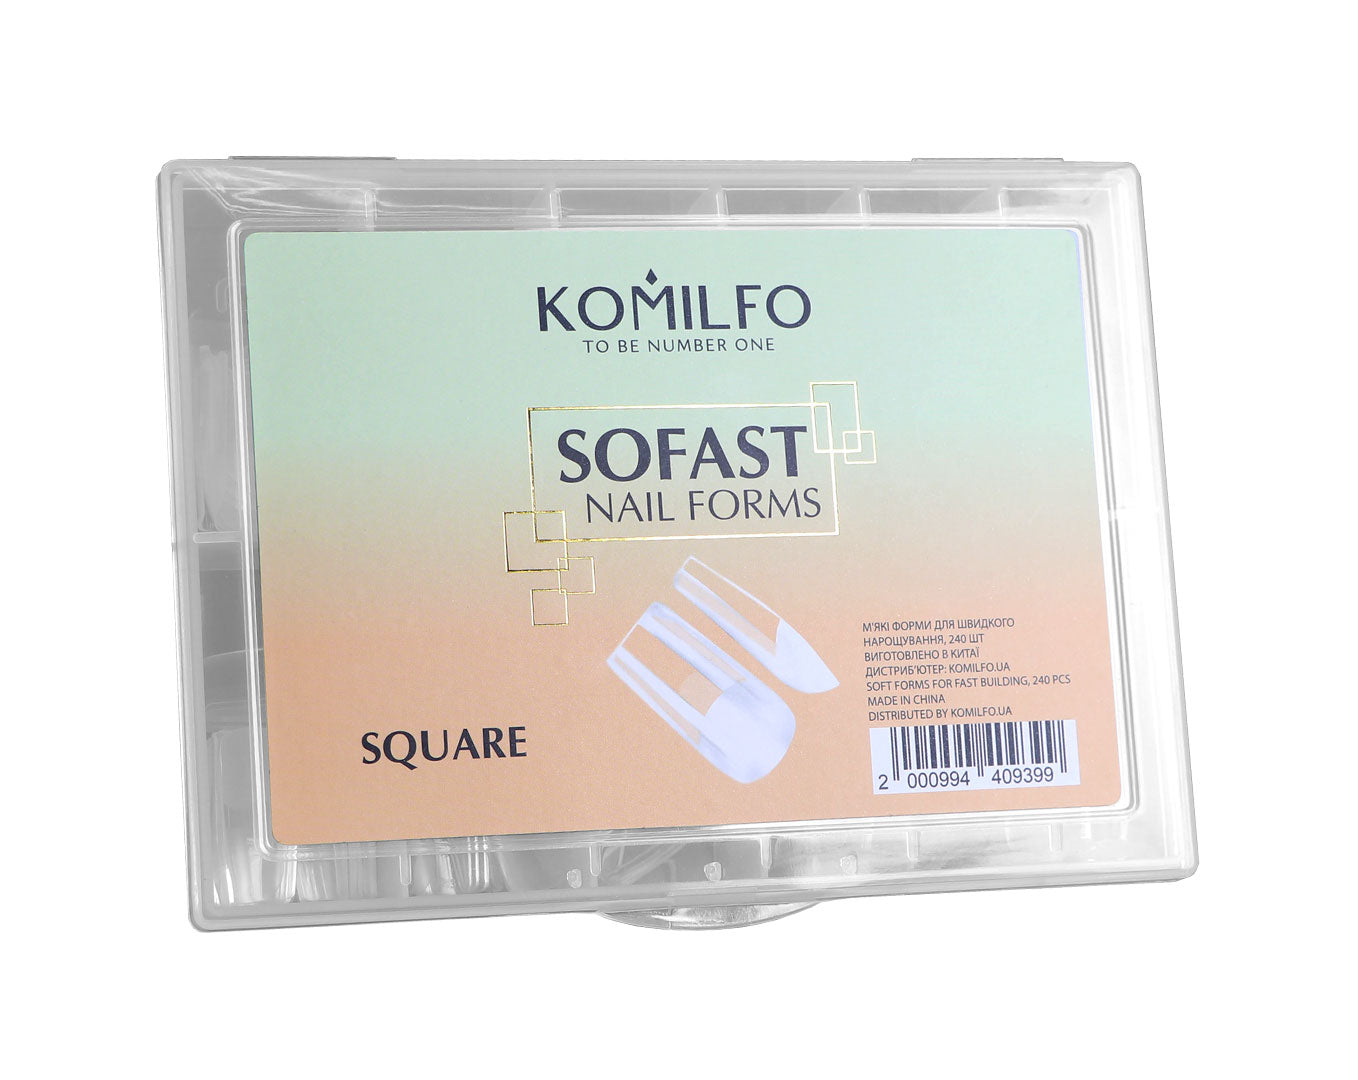 KOMILFO SOFAST NAIL FORMS SQUARE, 240 PCS 456073